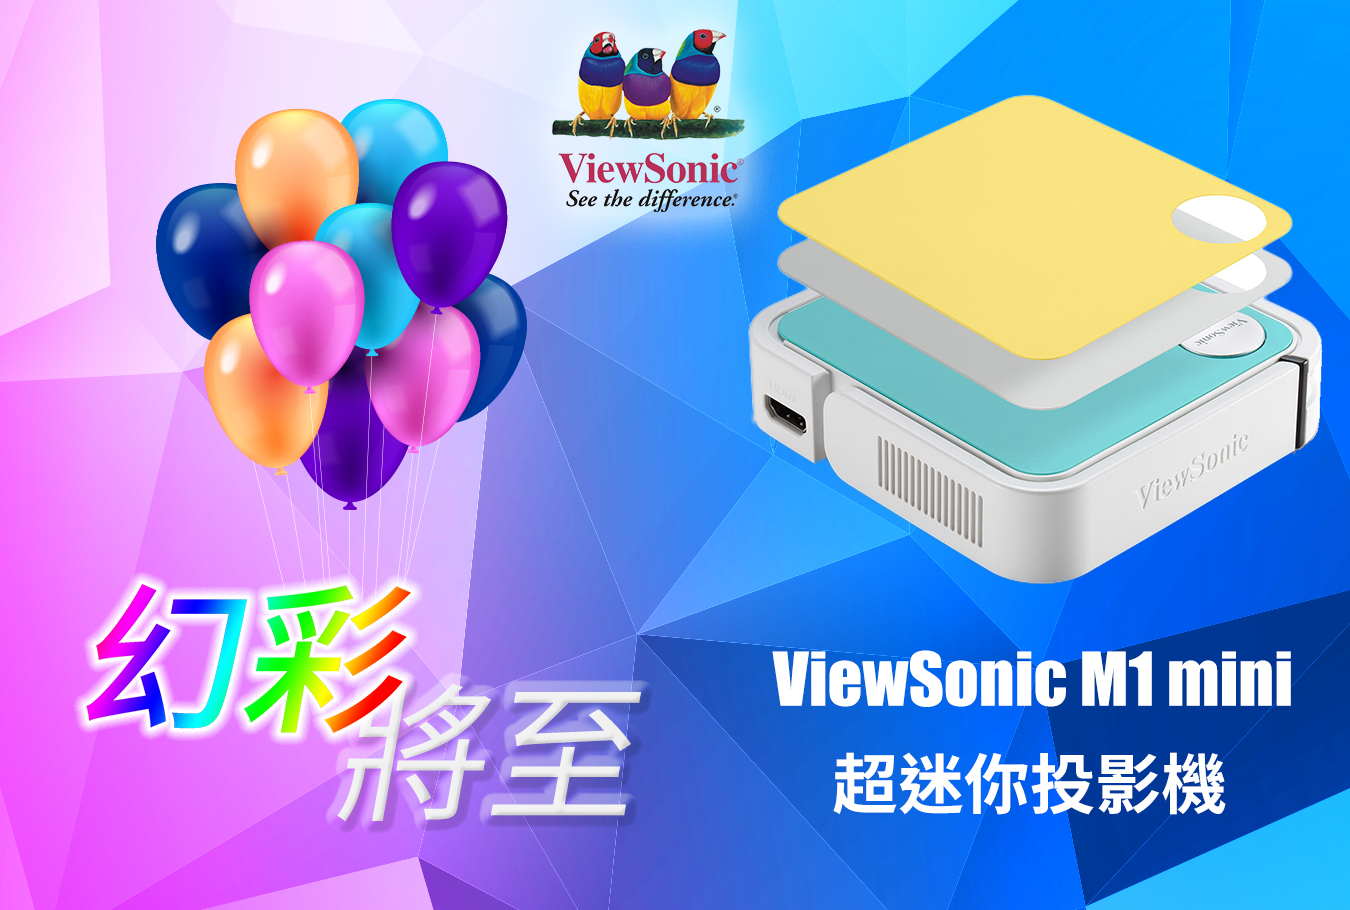 ViewSonic M1 mini 超迷你幻彩投影機 即將上市啦